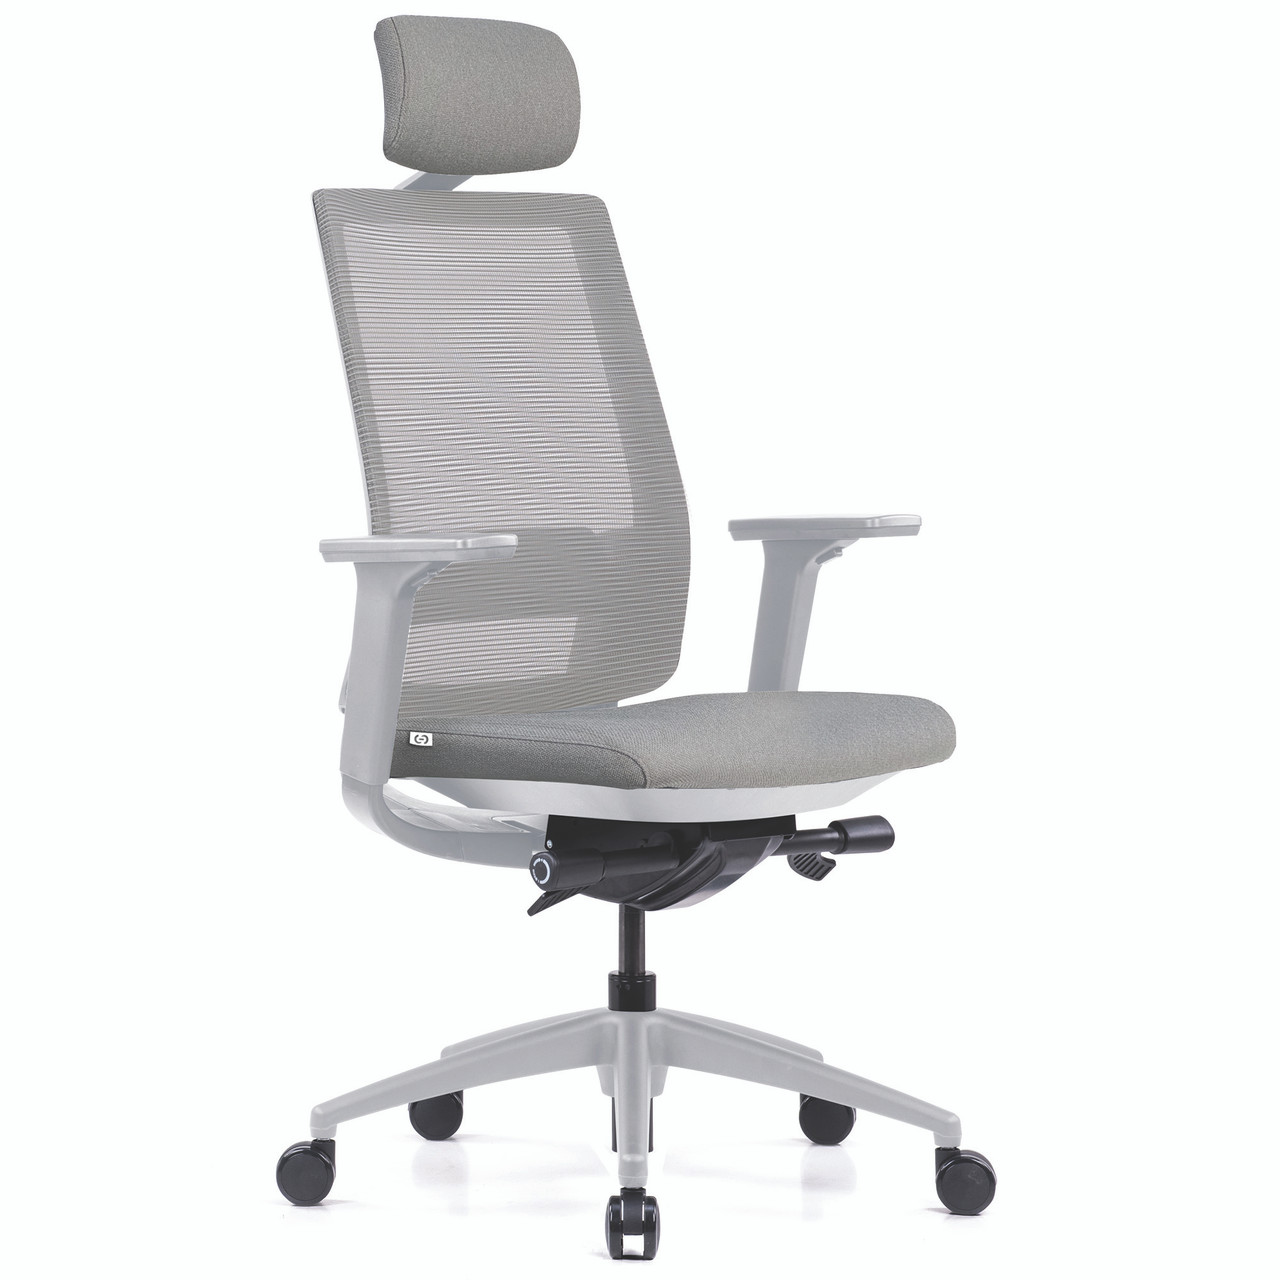 Palma High Back Mesh Task Chair with light gray frame